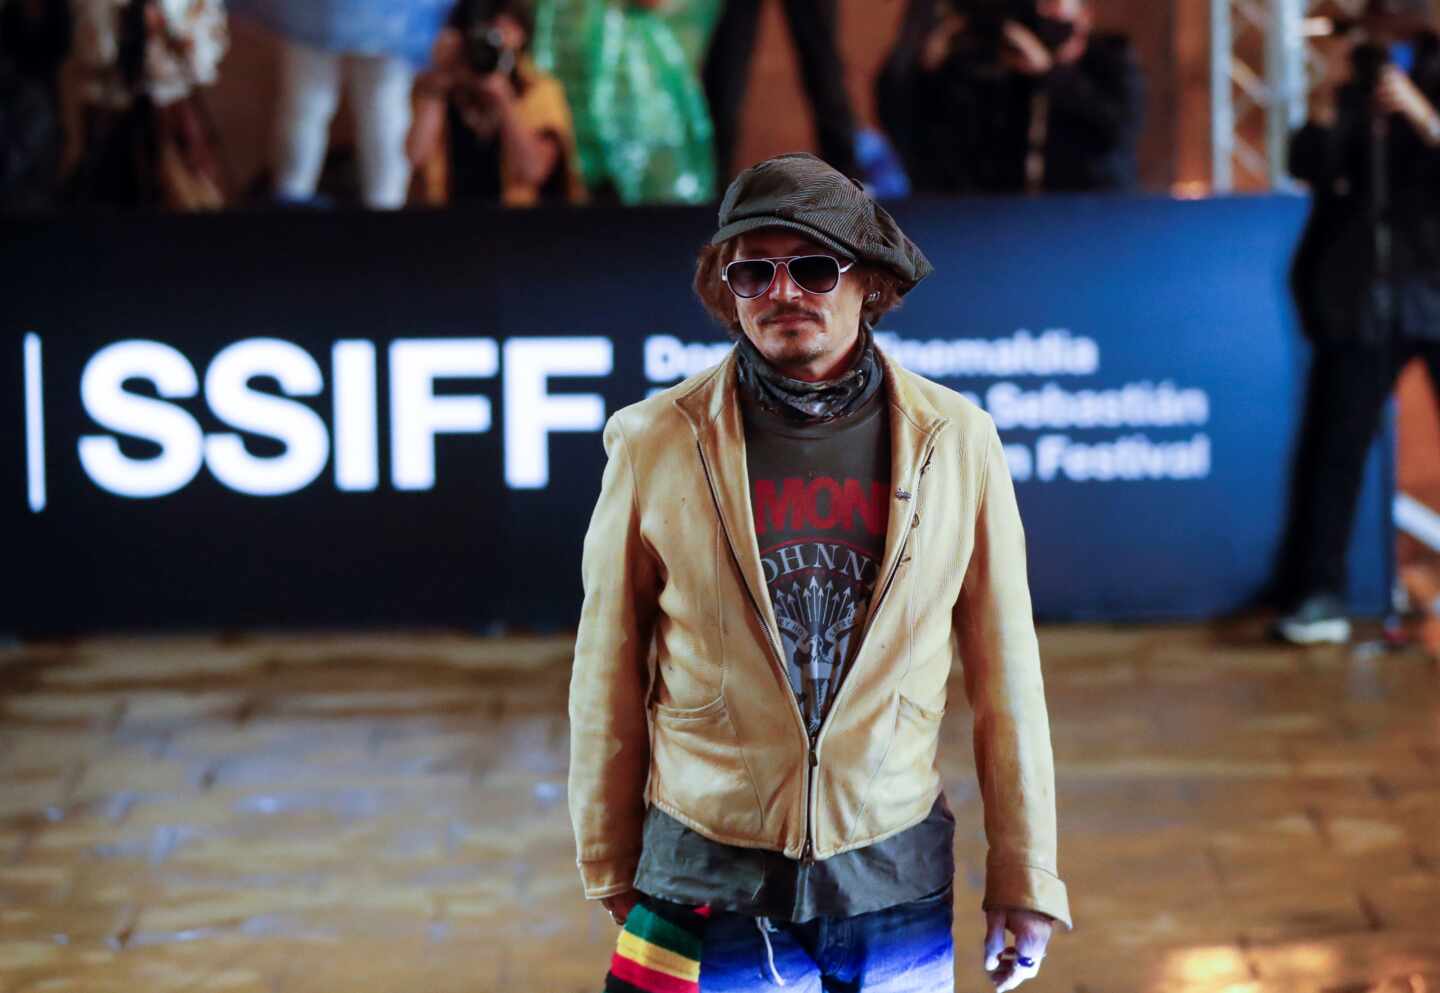 Johnny Depp critica a Trump en San Sebastián: "Es una comedia de terror"